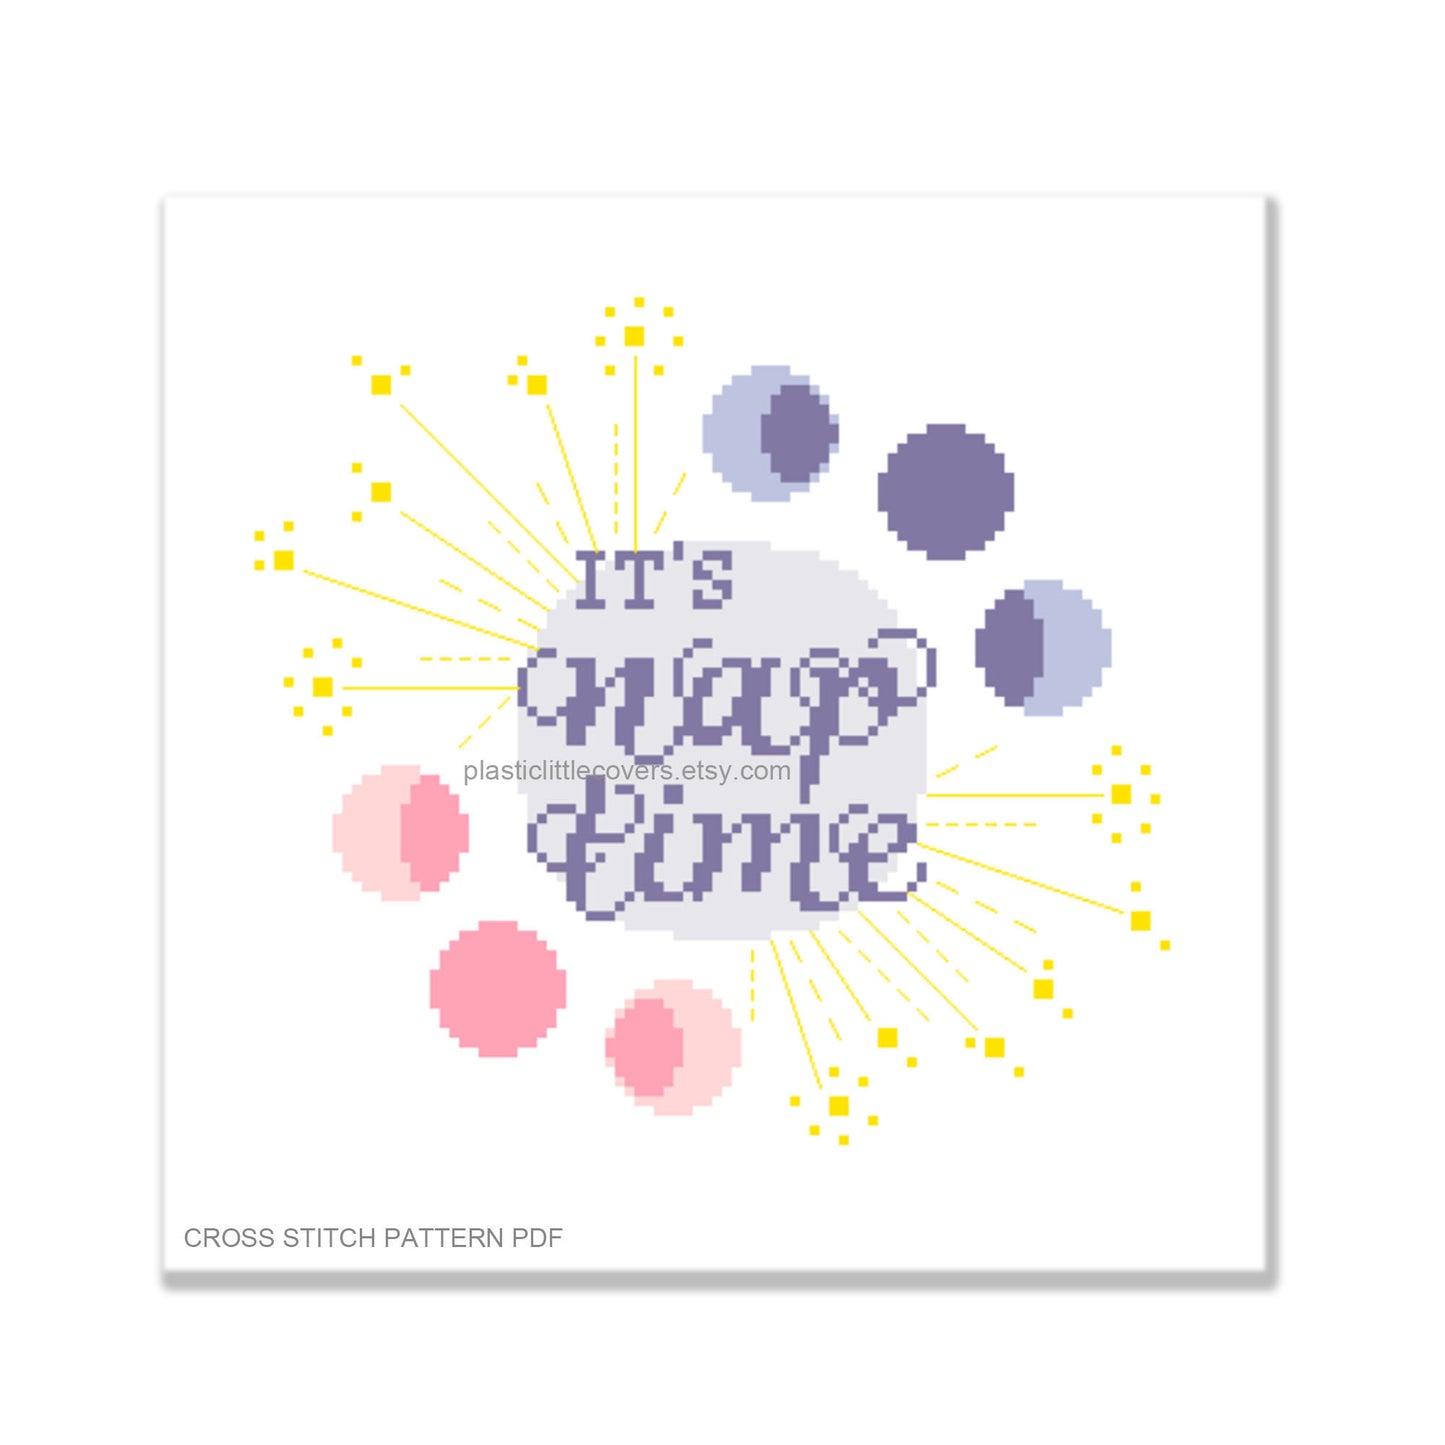 It's Nap Time - Cross Stitch Pattern PDF.